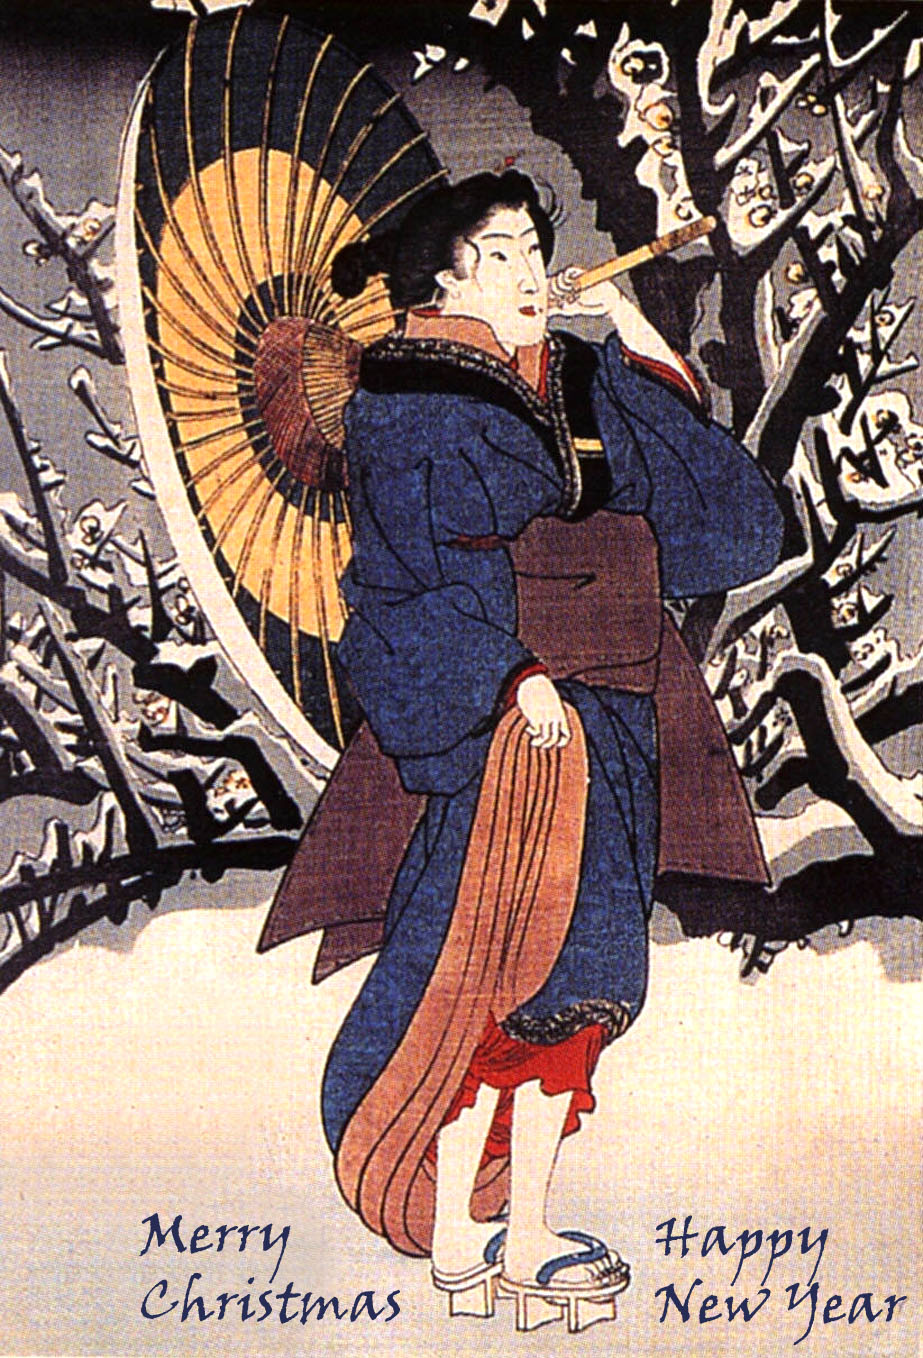 Japanese woman with umbrella in snow by Kuniyoshi Utagawa - Christmas and New Year card